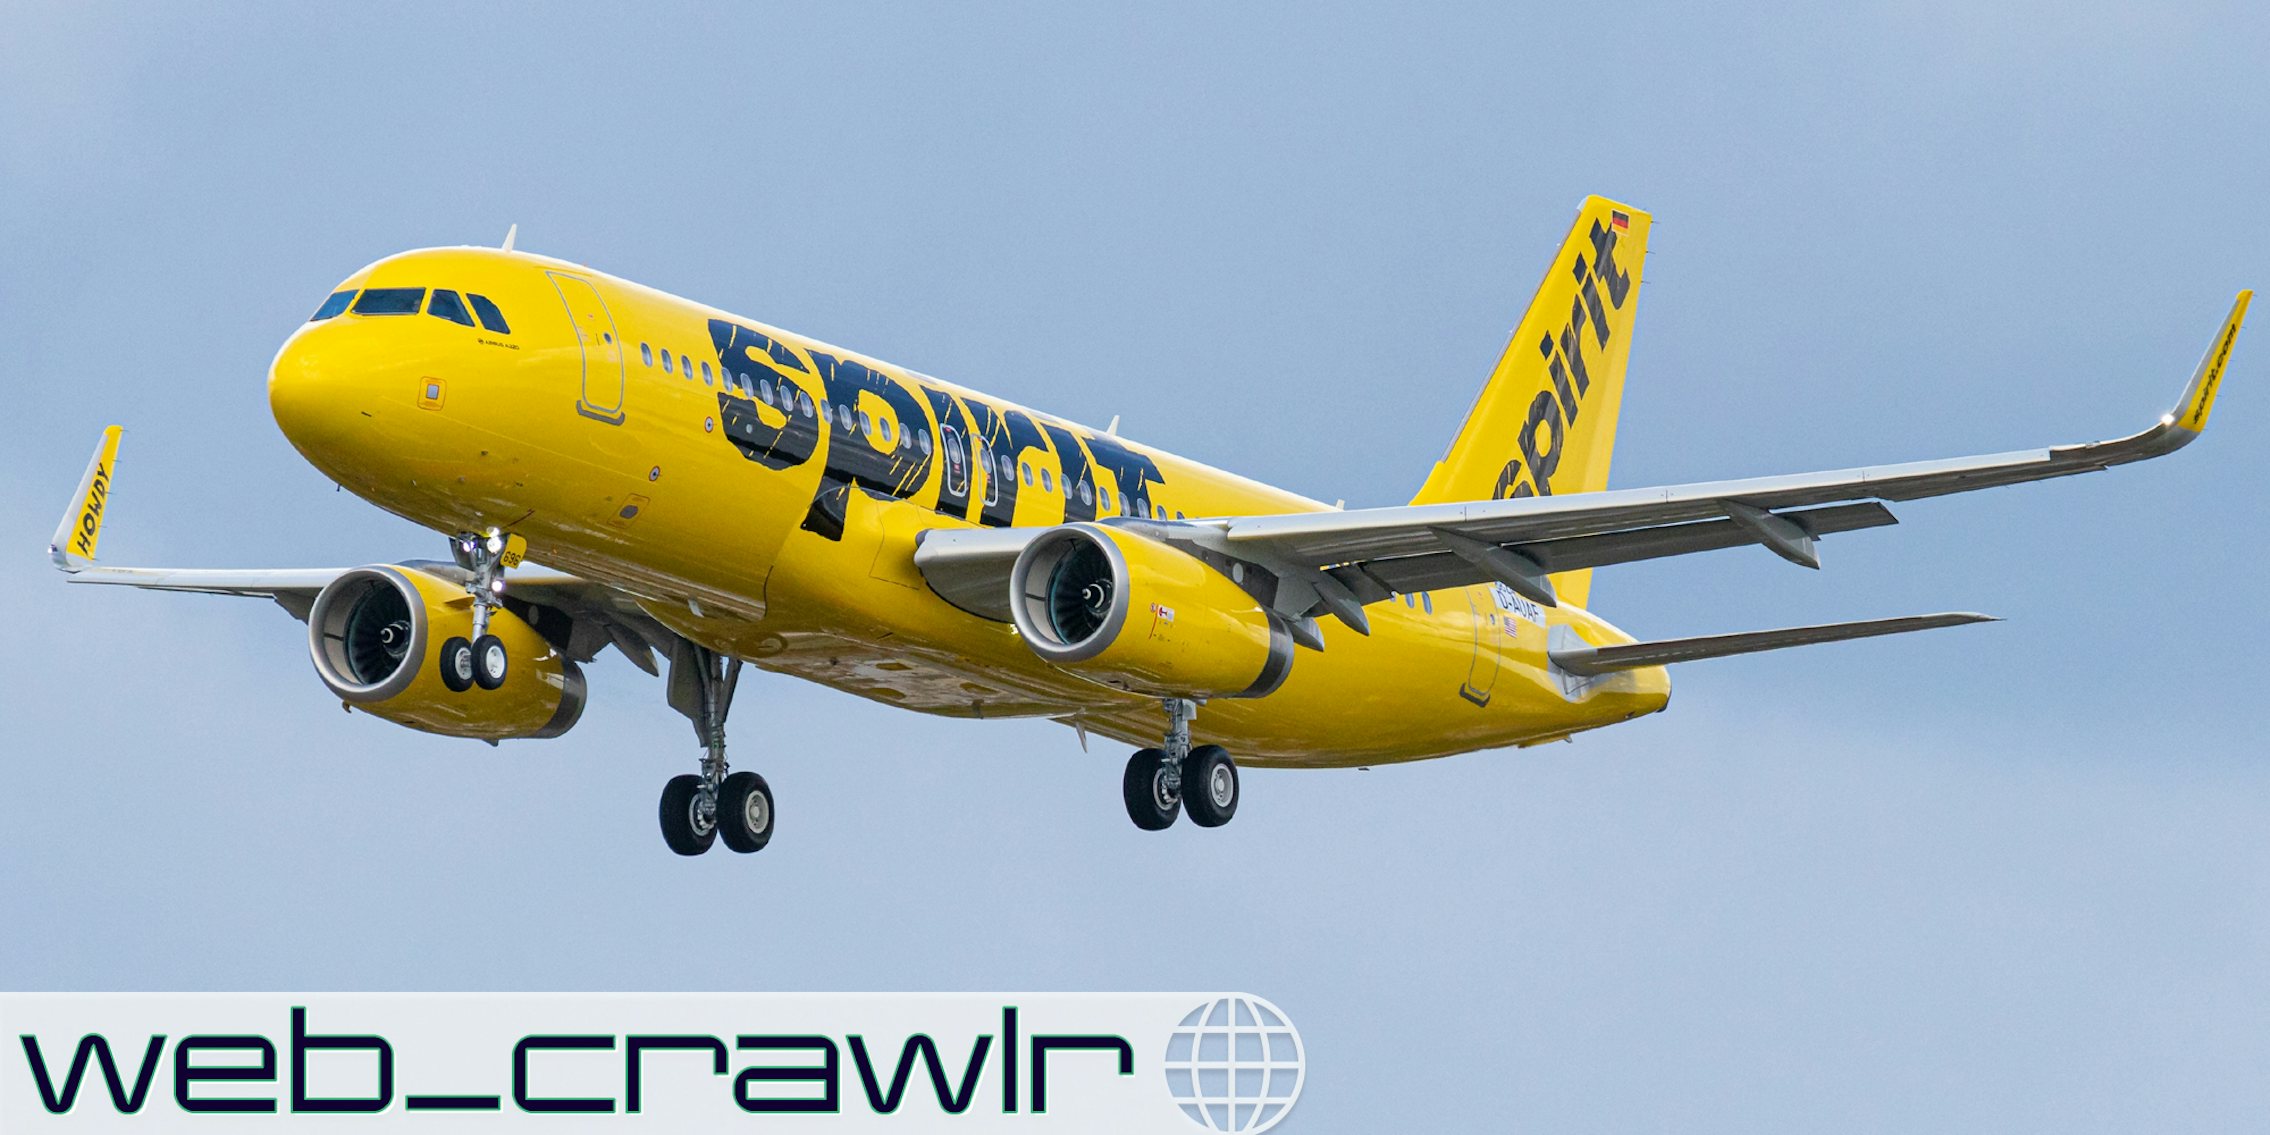 A Spirit Airlines plane. The Daily Dot newsletter web_crawlr logo is in the bottom left corner.